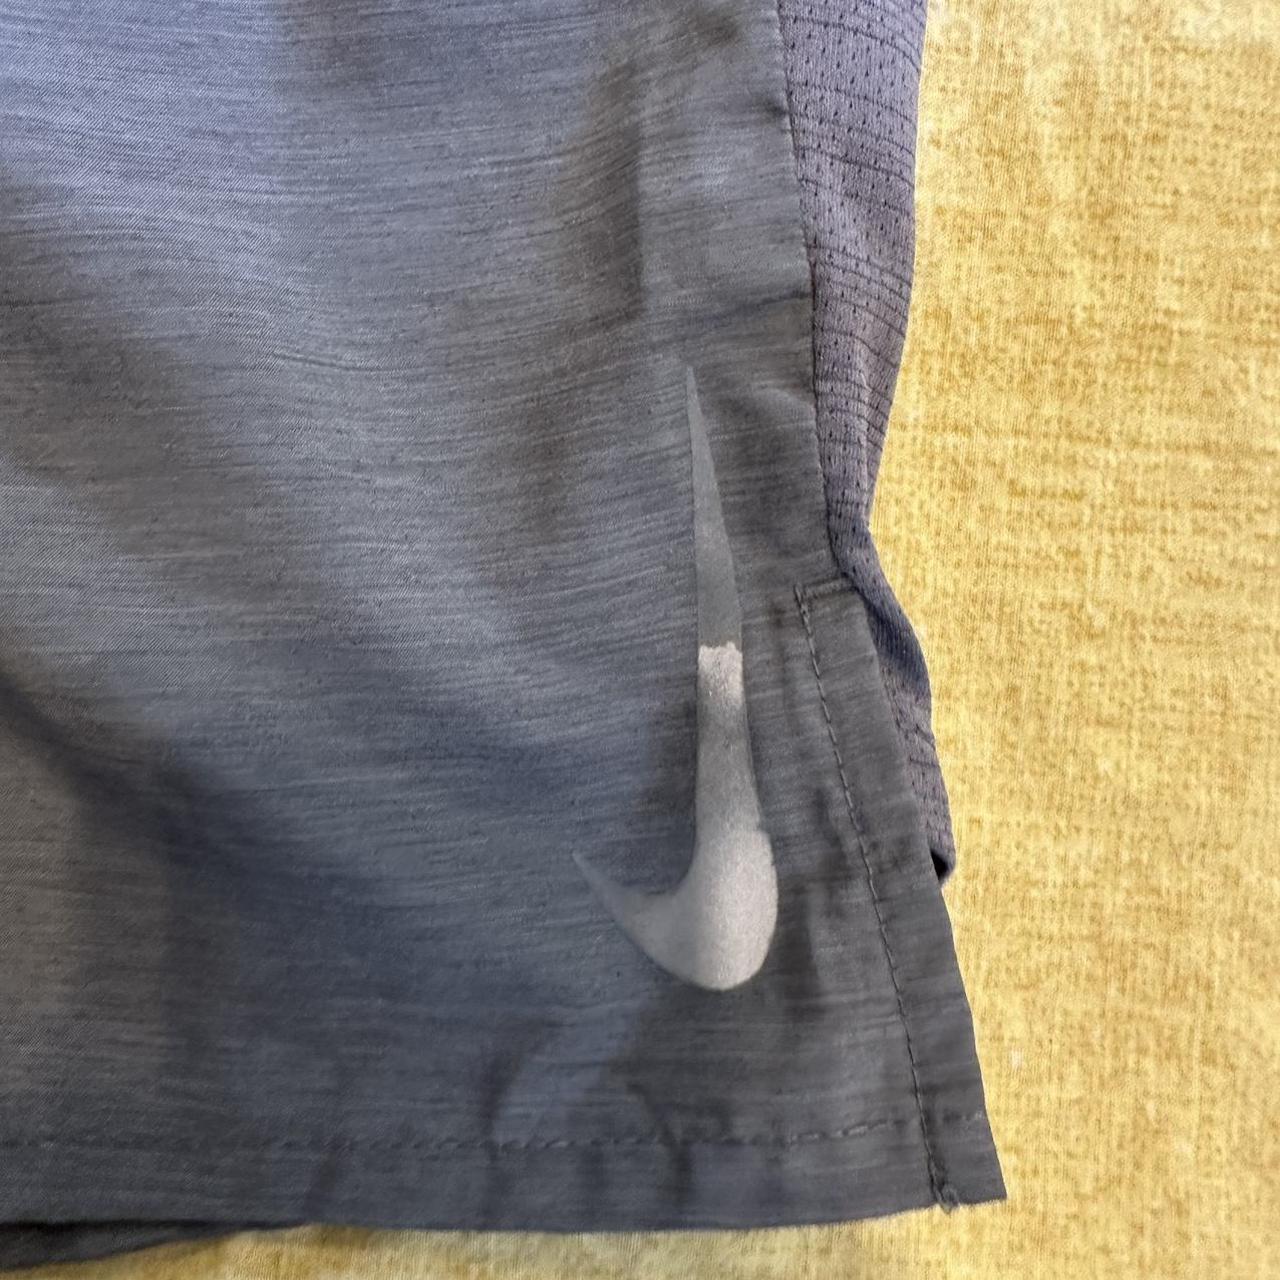 Nike Men's Shorts | Depop